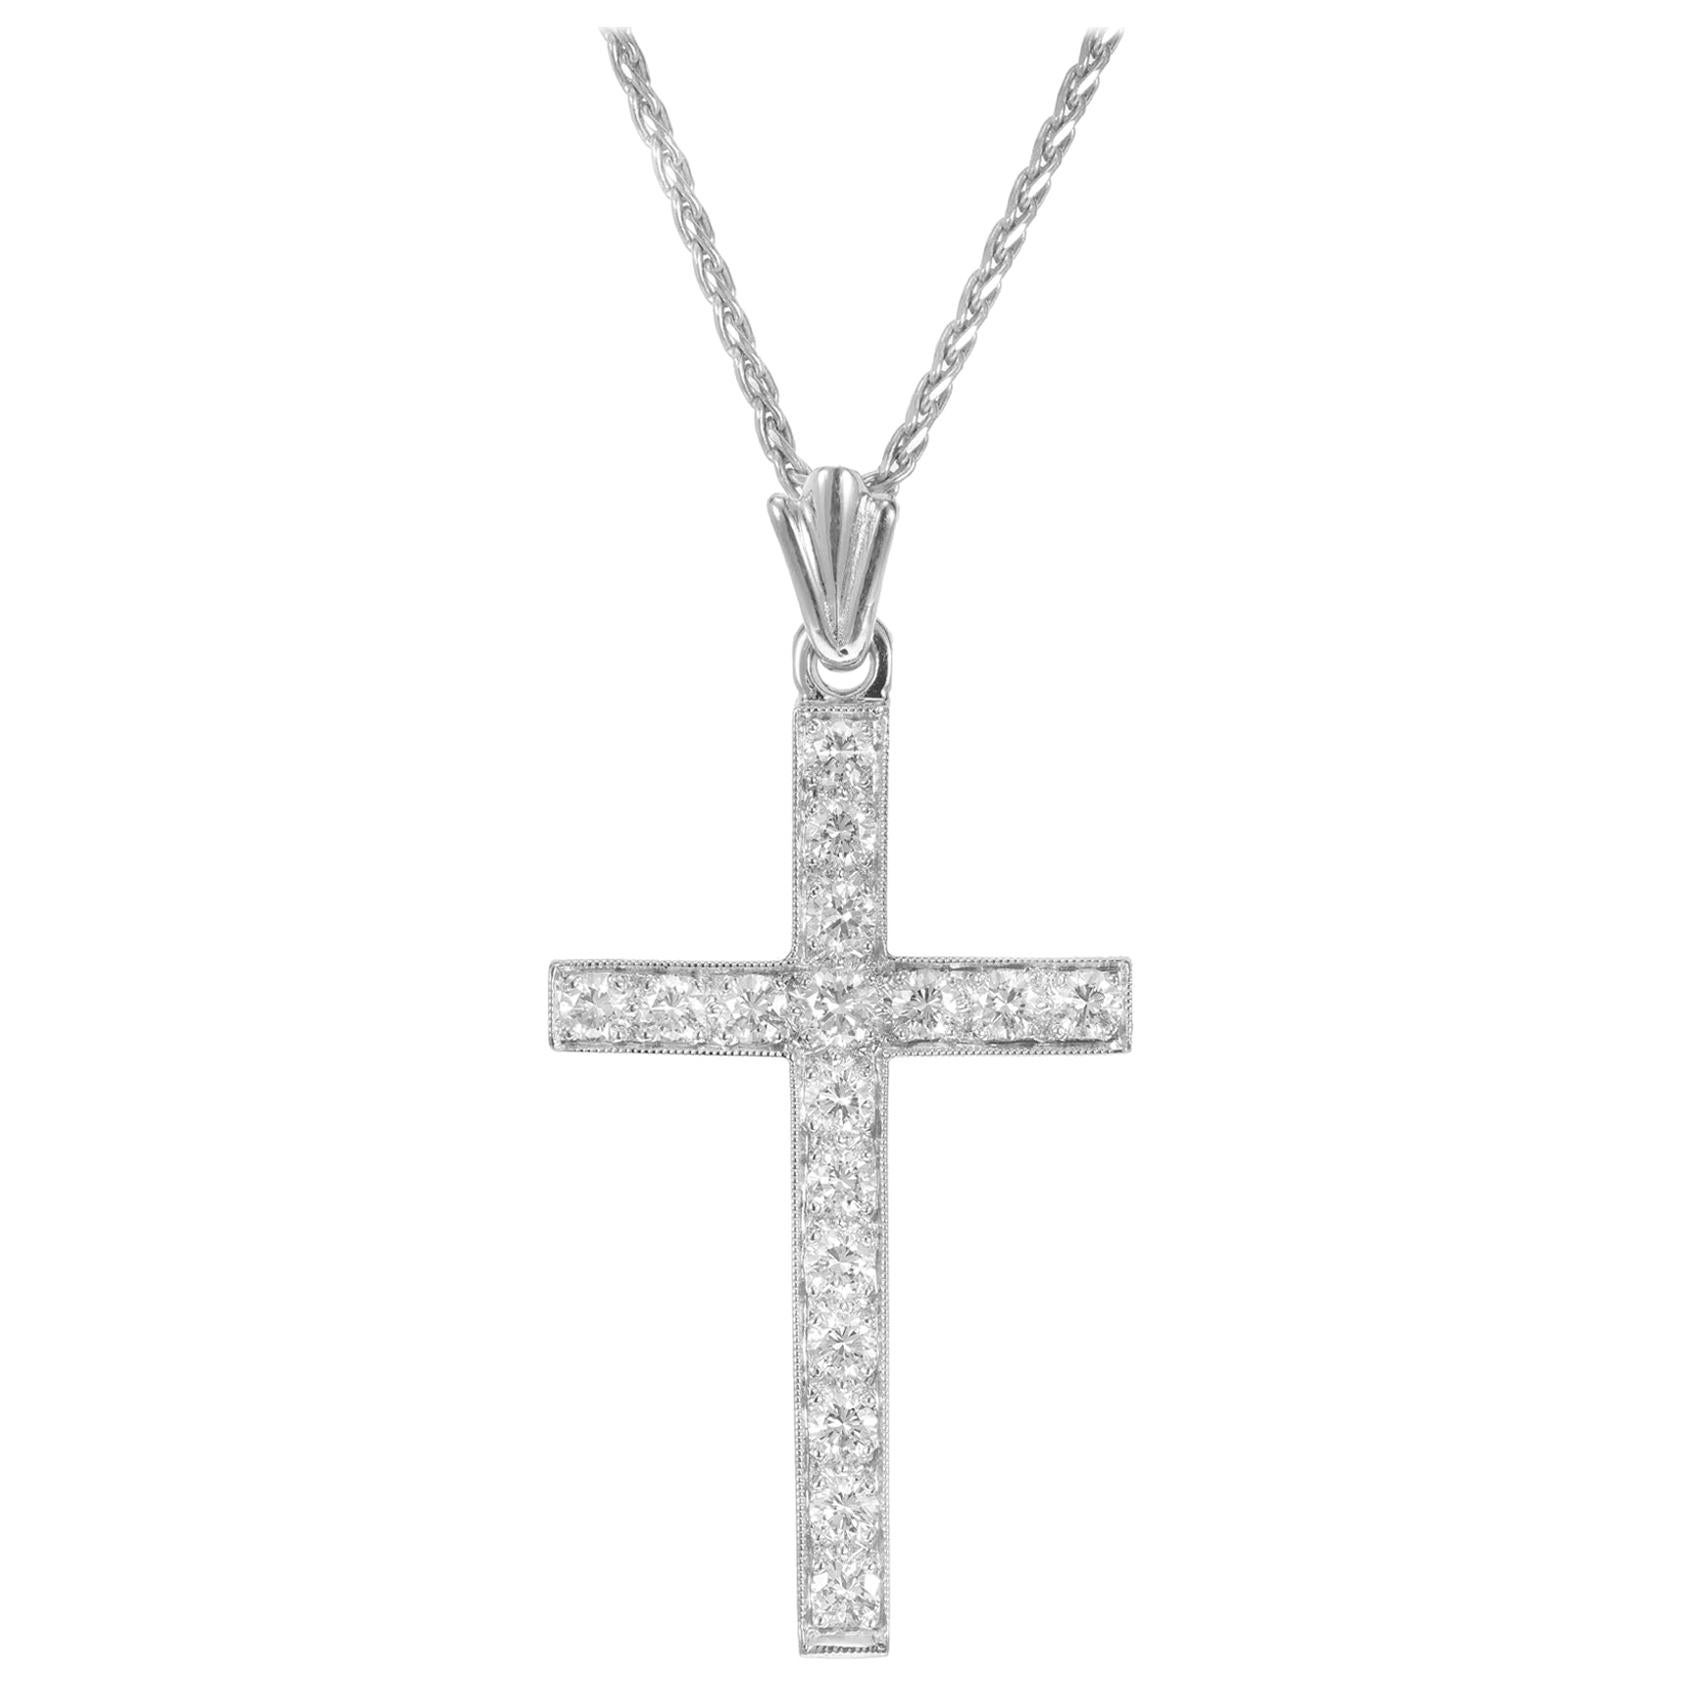 .45 Carat Diamond White Gold Cross Pendant Necklace